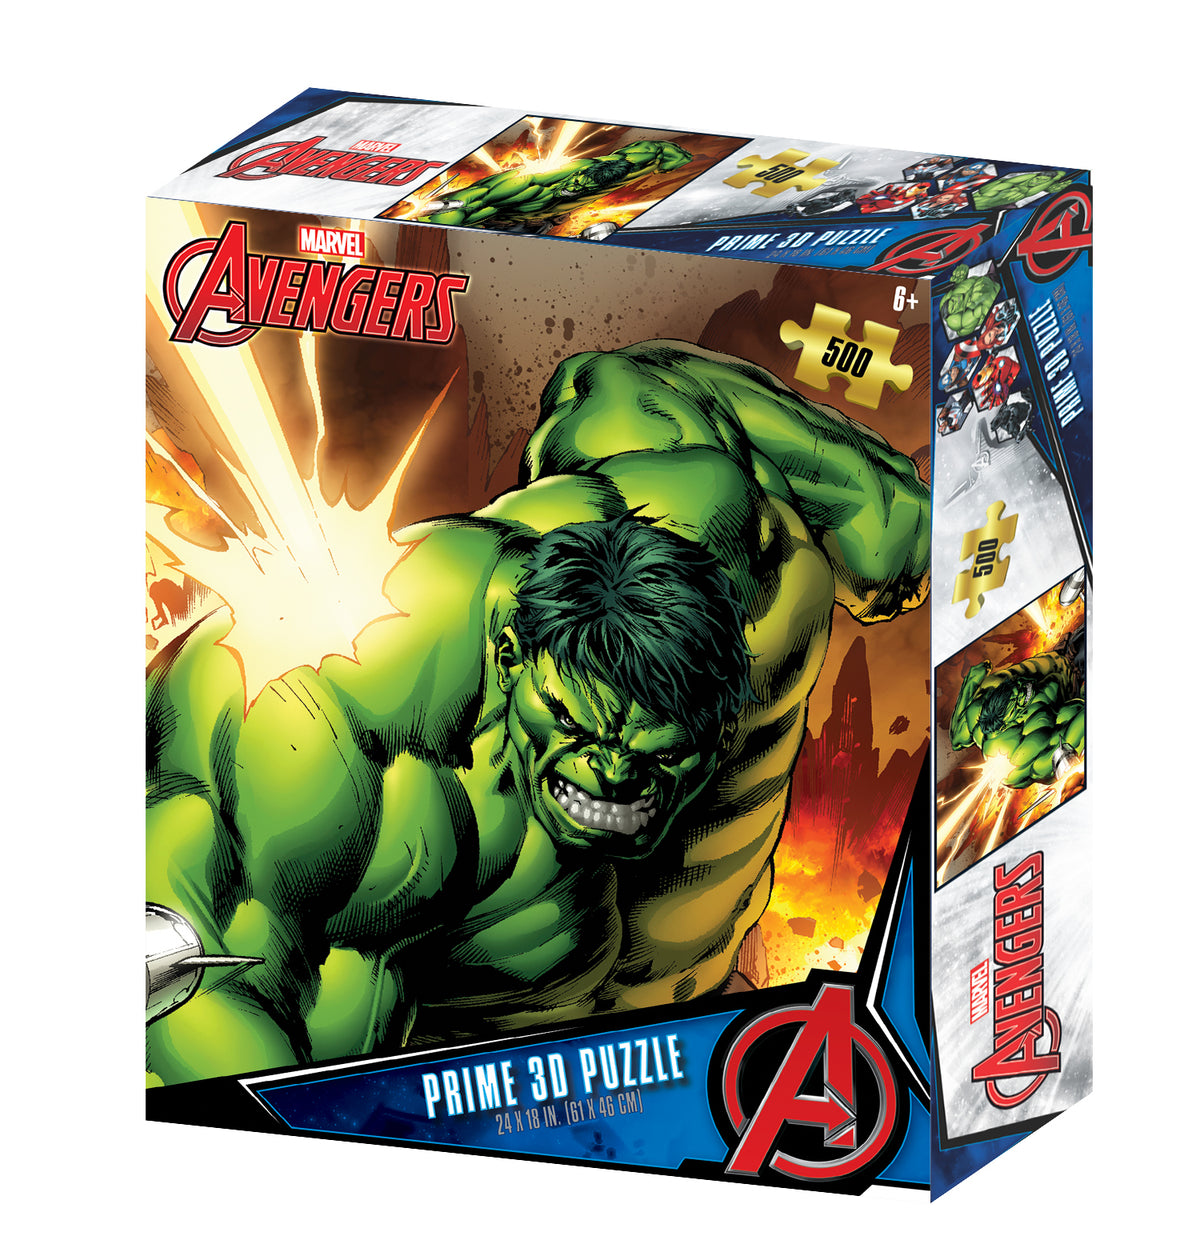 Avengers - The Hulk Marvel 3D Jigsaw Puzzle 32672 500pc 24x18"